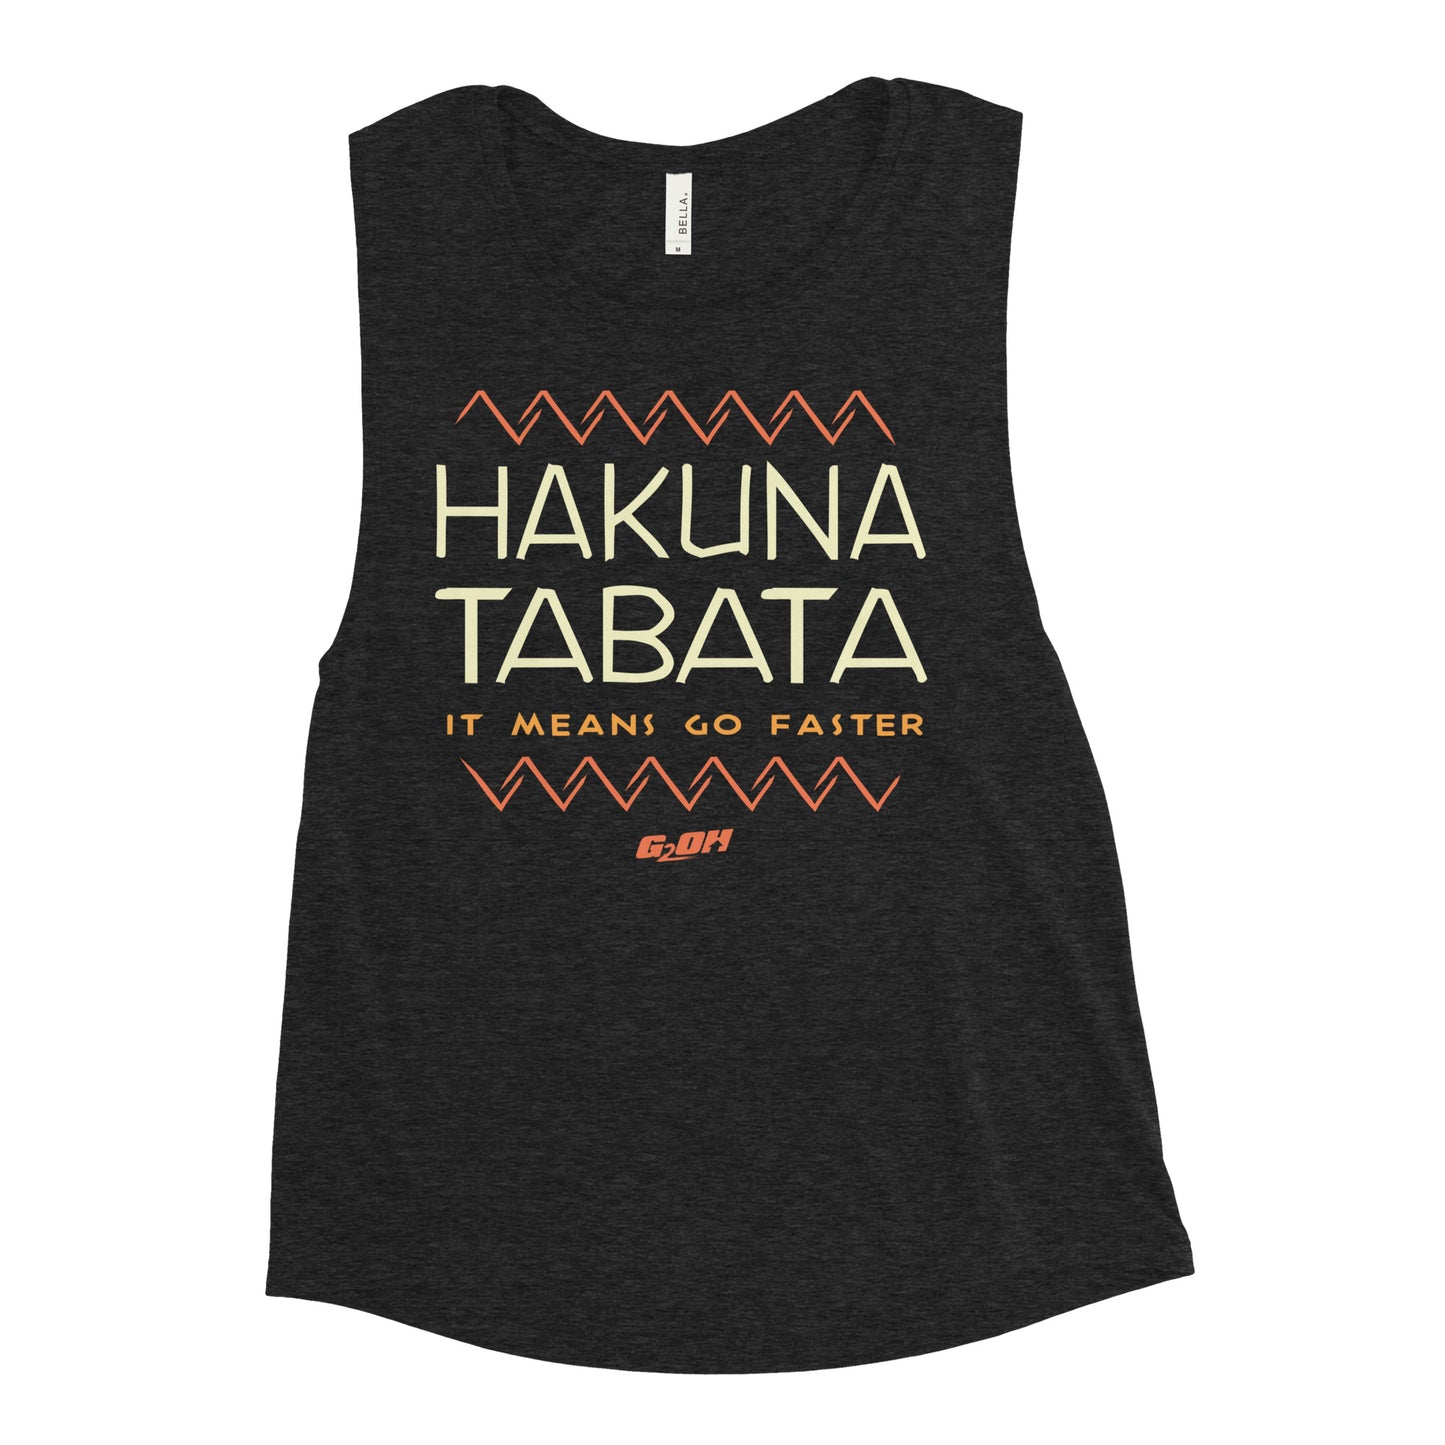 Hakuna Tabata Women's Muscle Tank